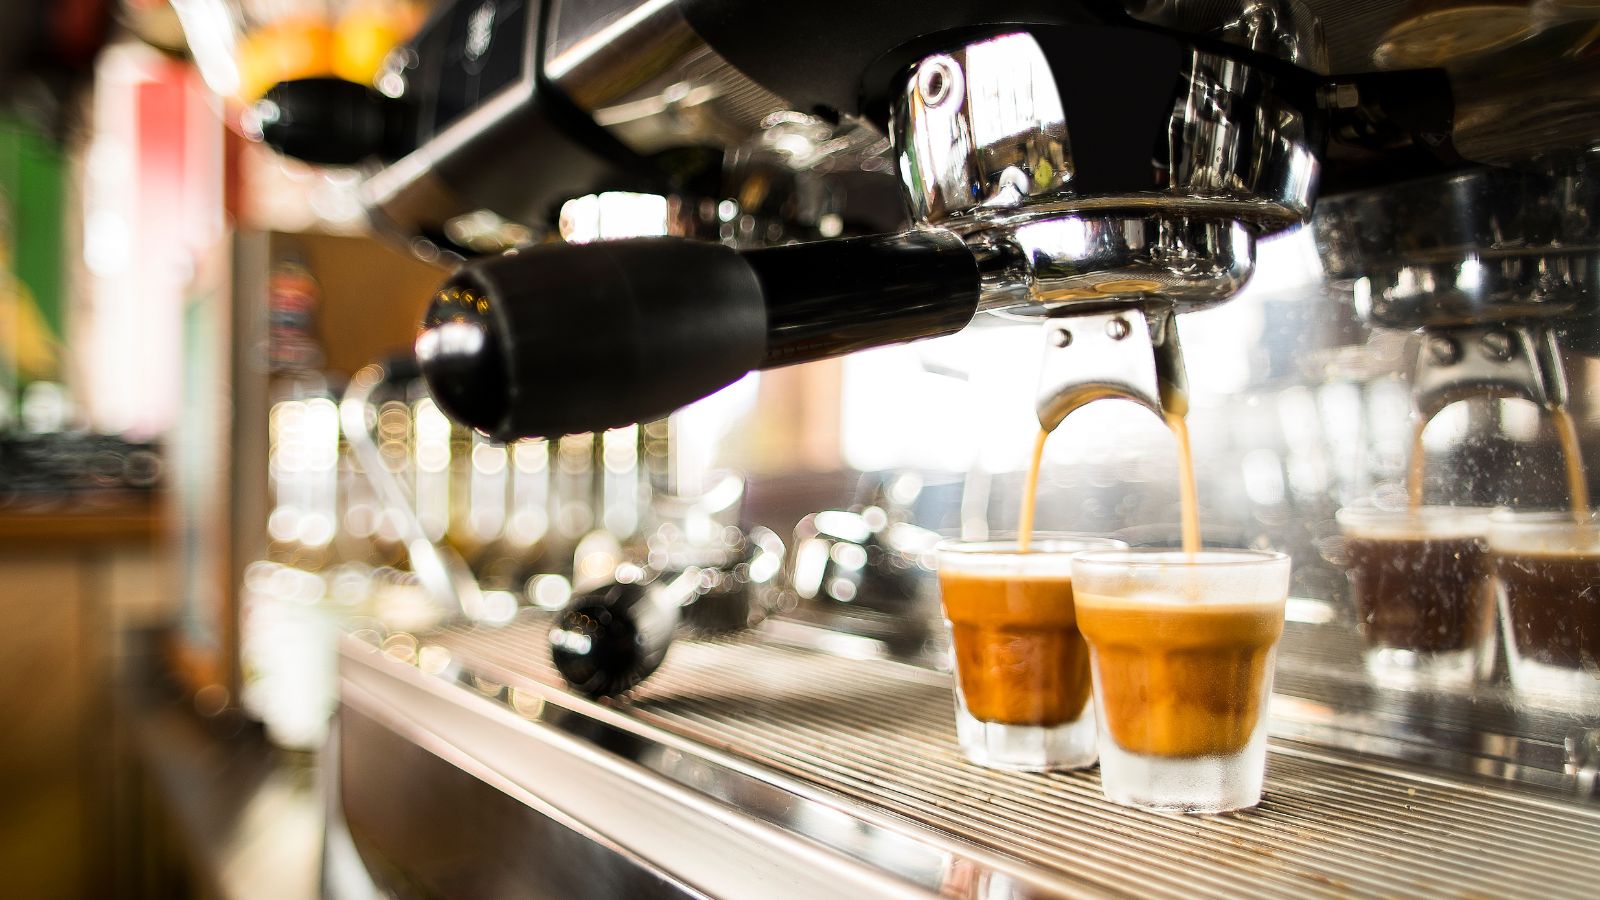 Espresso: The Golden Rule